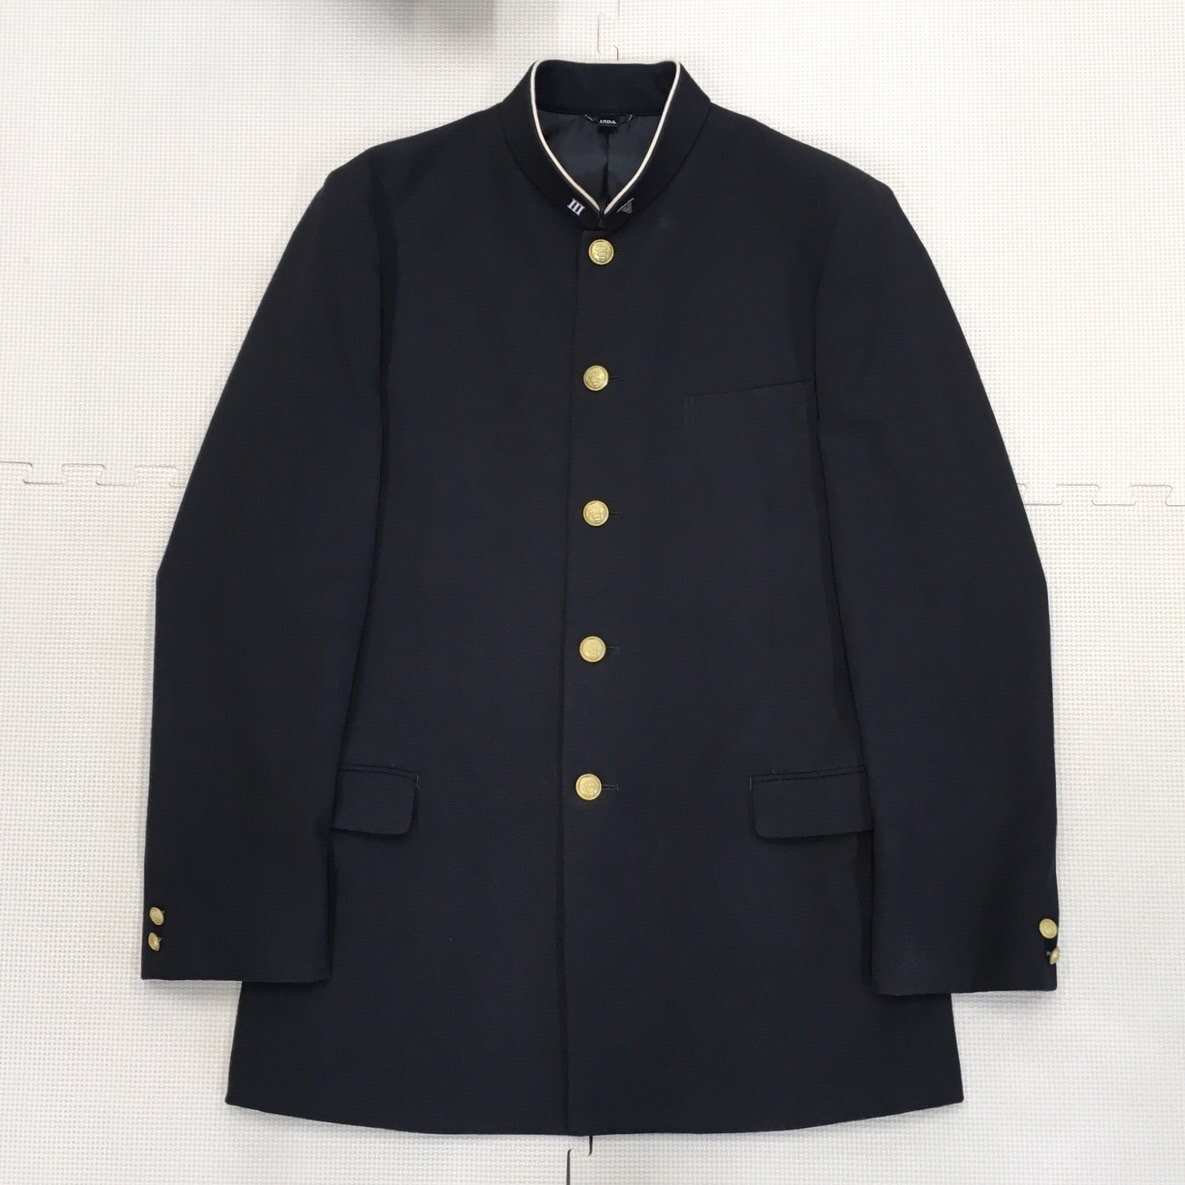 A648/T970( used ) Tochigi prefecture Utsunomiya quotient industry high school man . uniform 4 point / old uniform /C rank /190A/W82/. Ran / cardigan / trousers / black / round color / standard type school uniform 